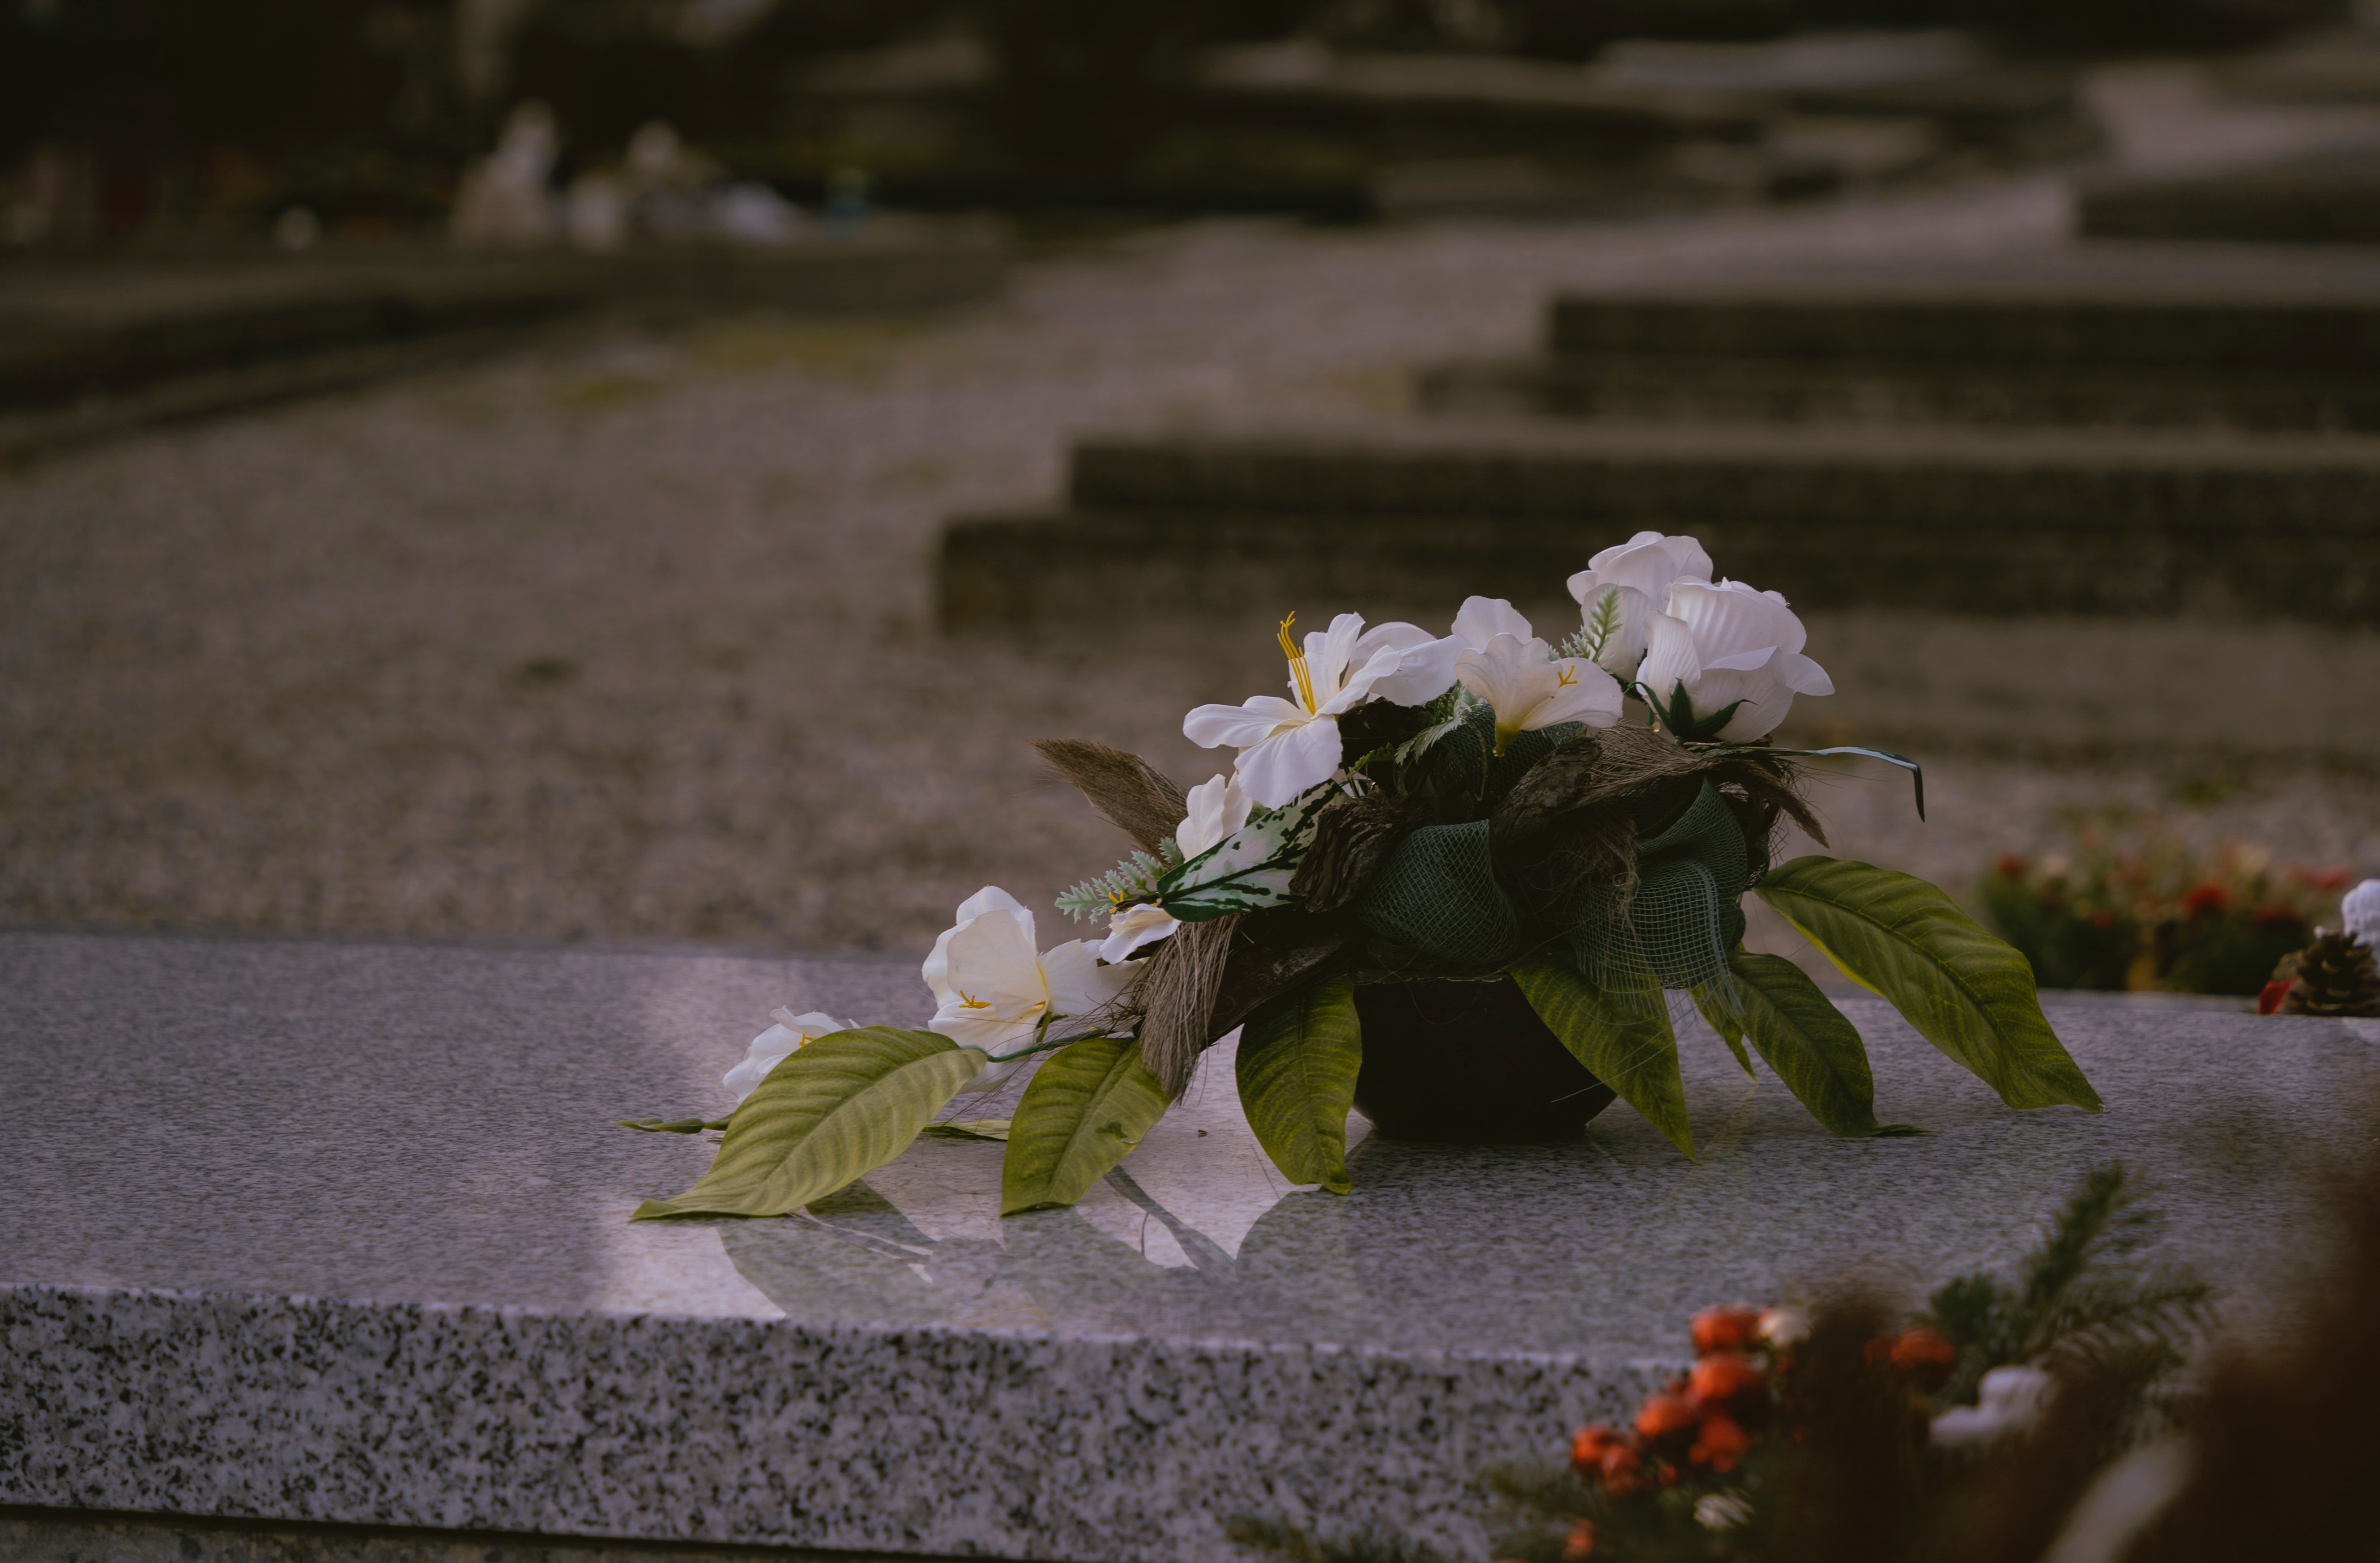 Edgar saw the woman placing flowers on Caroline's grave. | Source: Unsplash